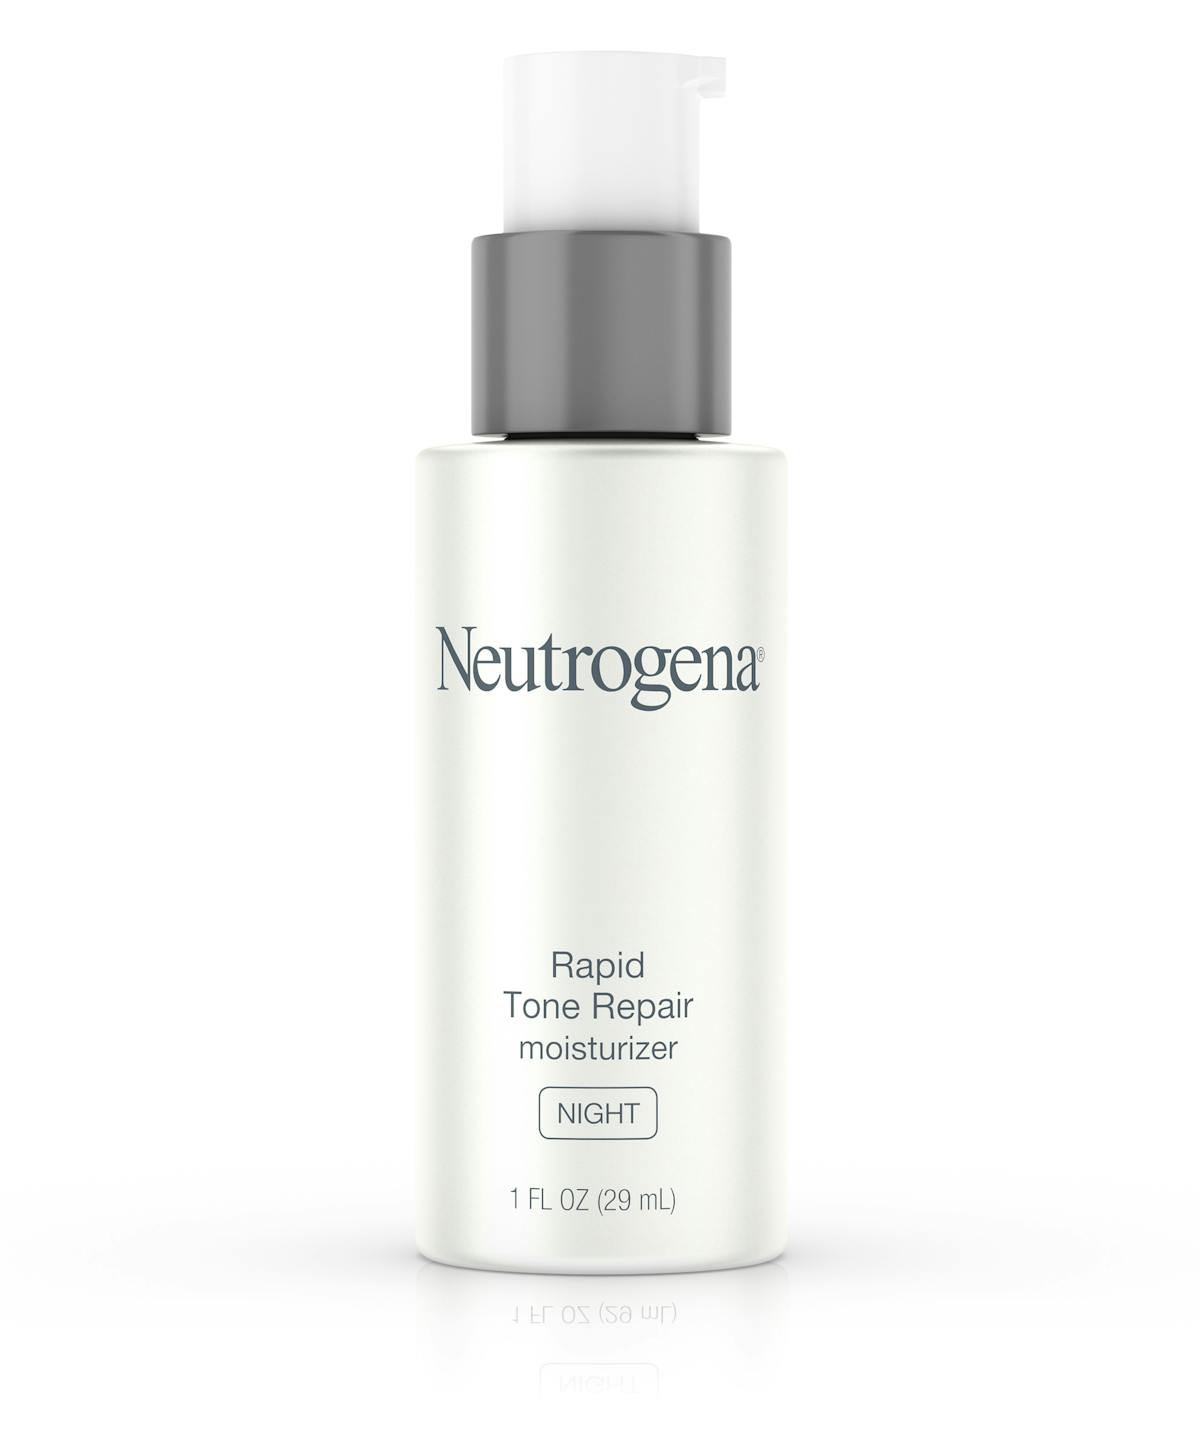 neutrogena wrinkle repair night moisturizer